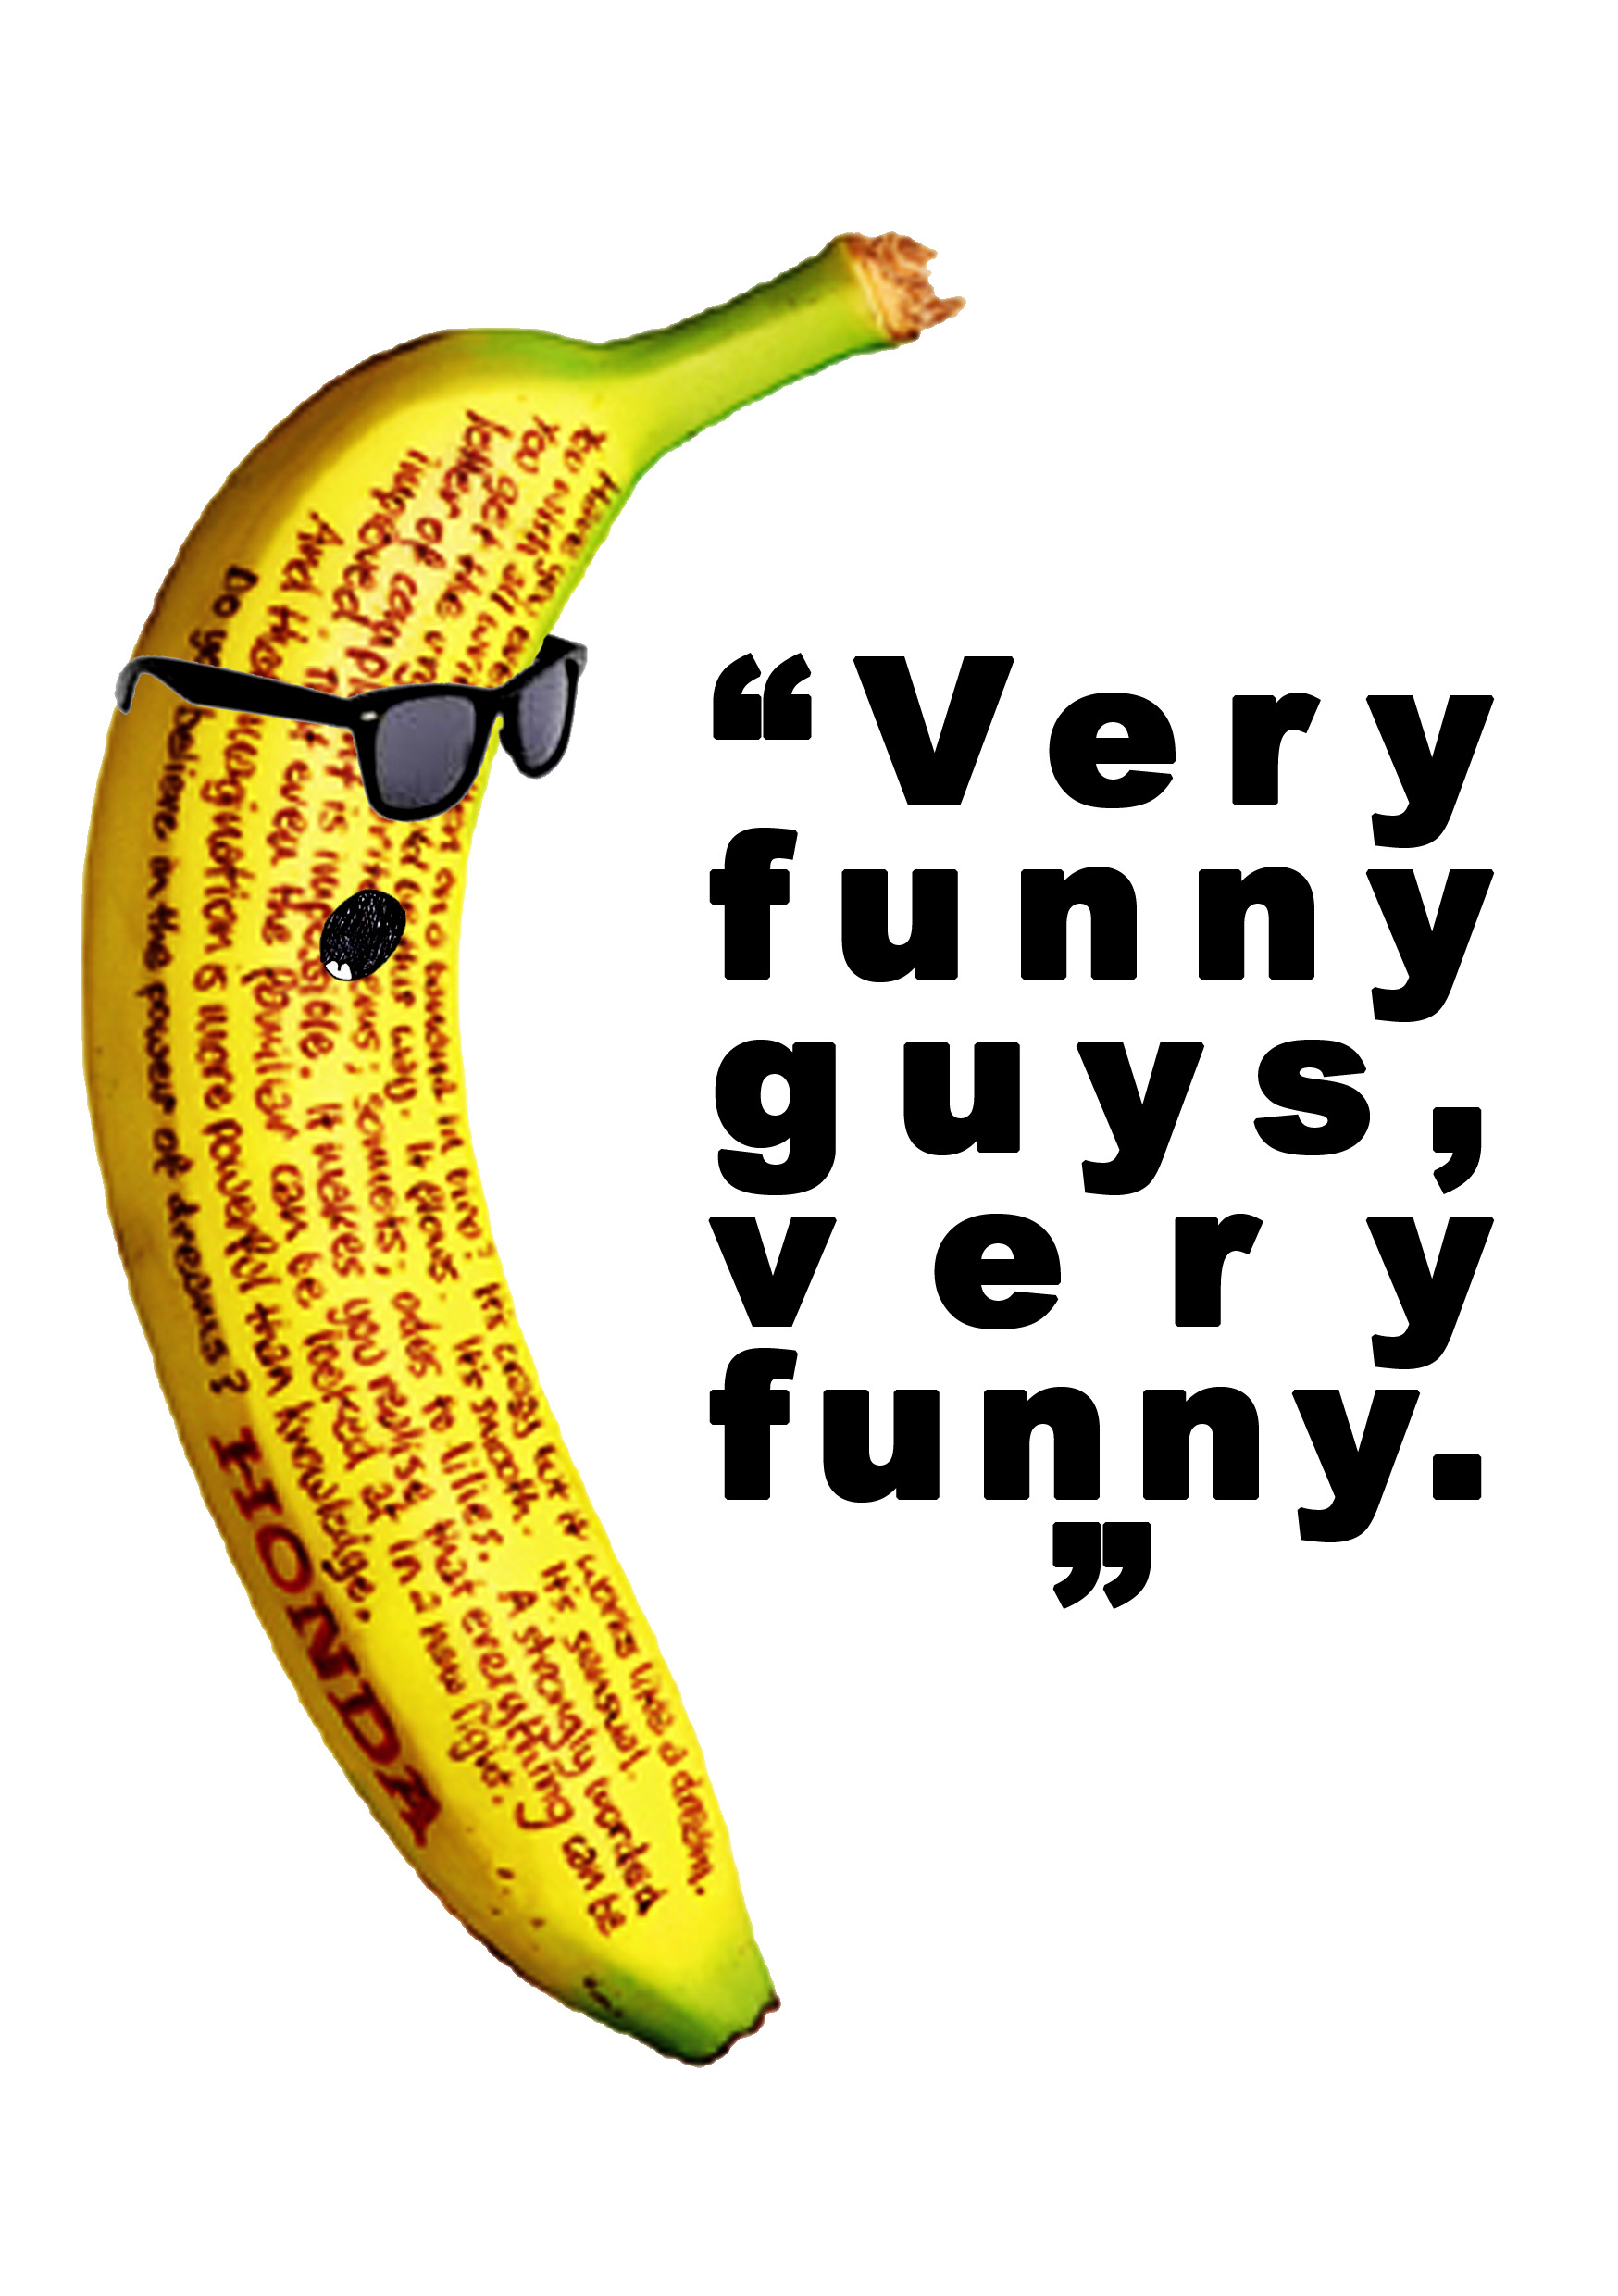 Download Funny Banana Jokes Wallpaper HD. | 